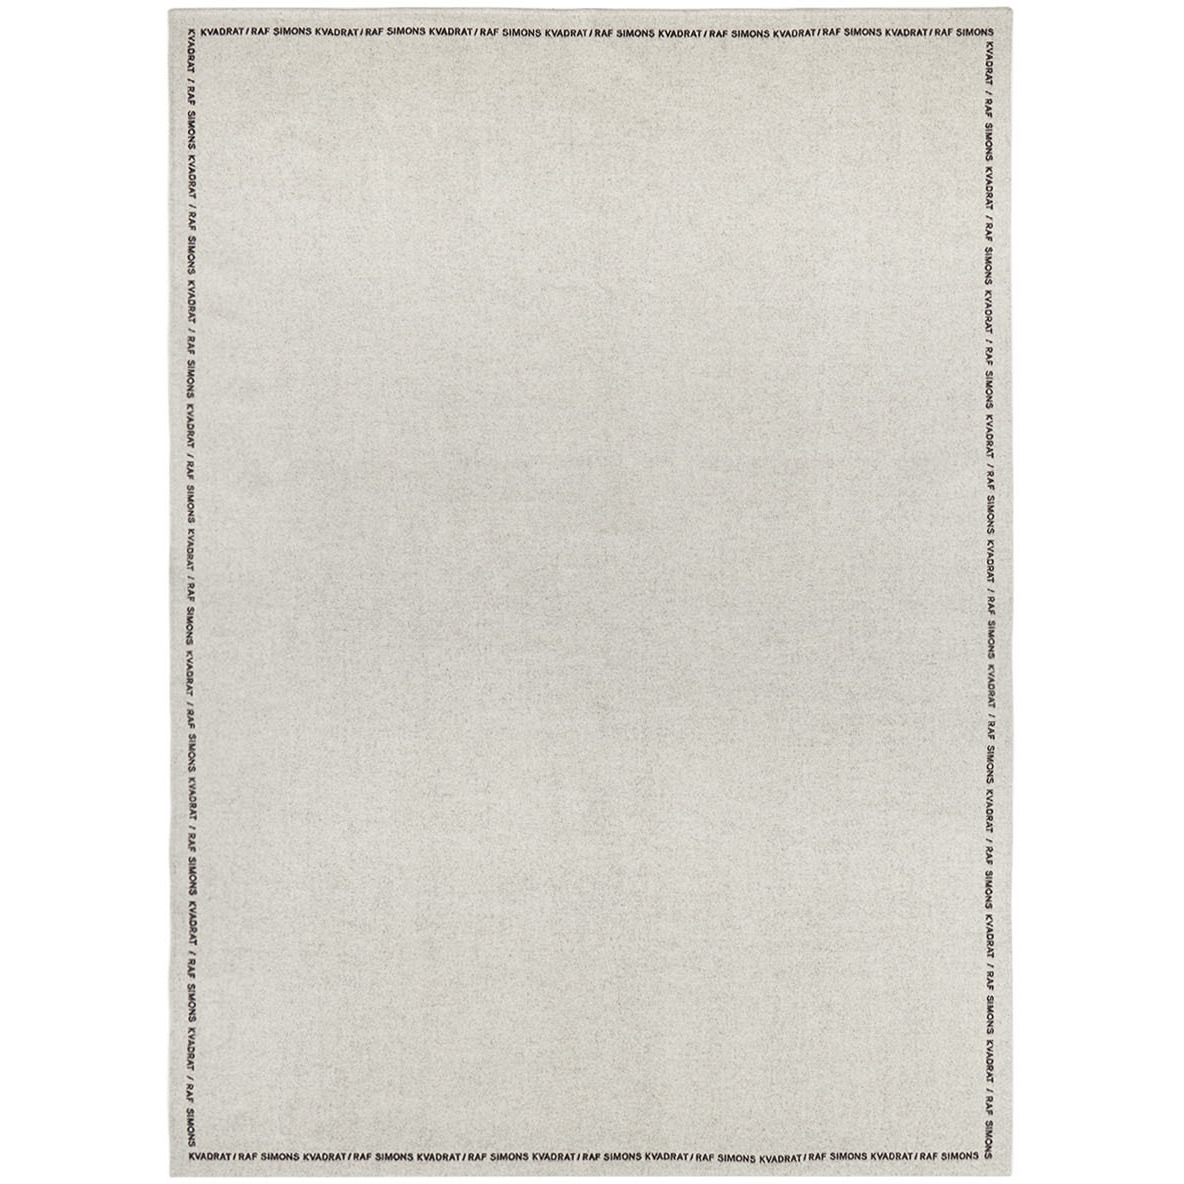 Kvadrat/Raf Simons Off-White Double-Faced Wool Throw - image 1